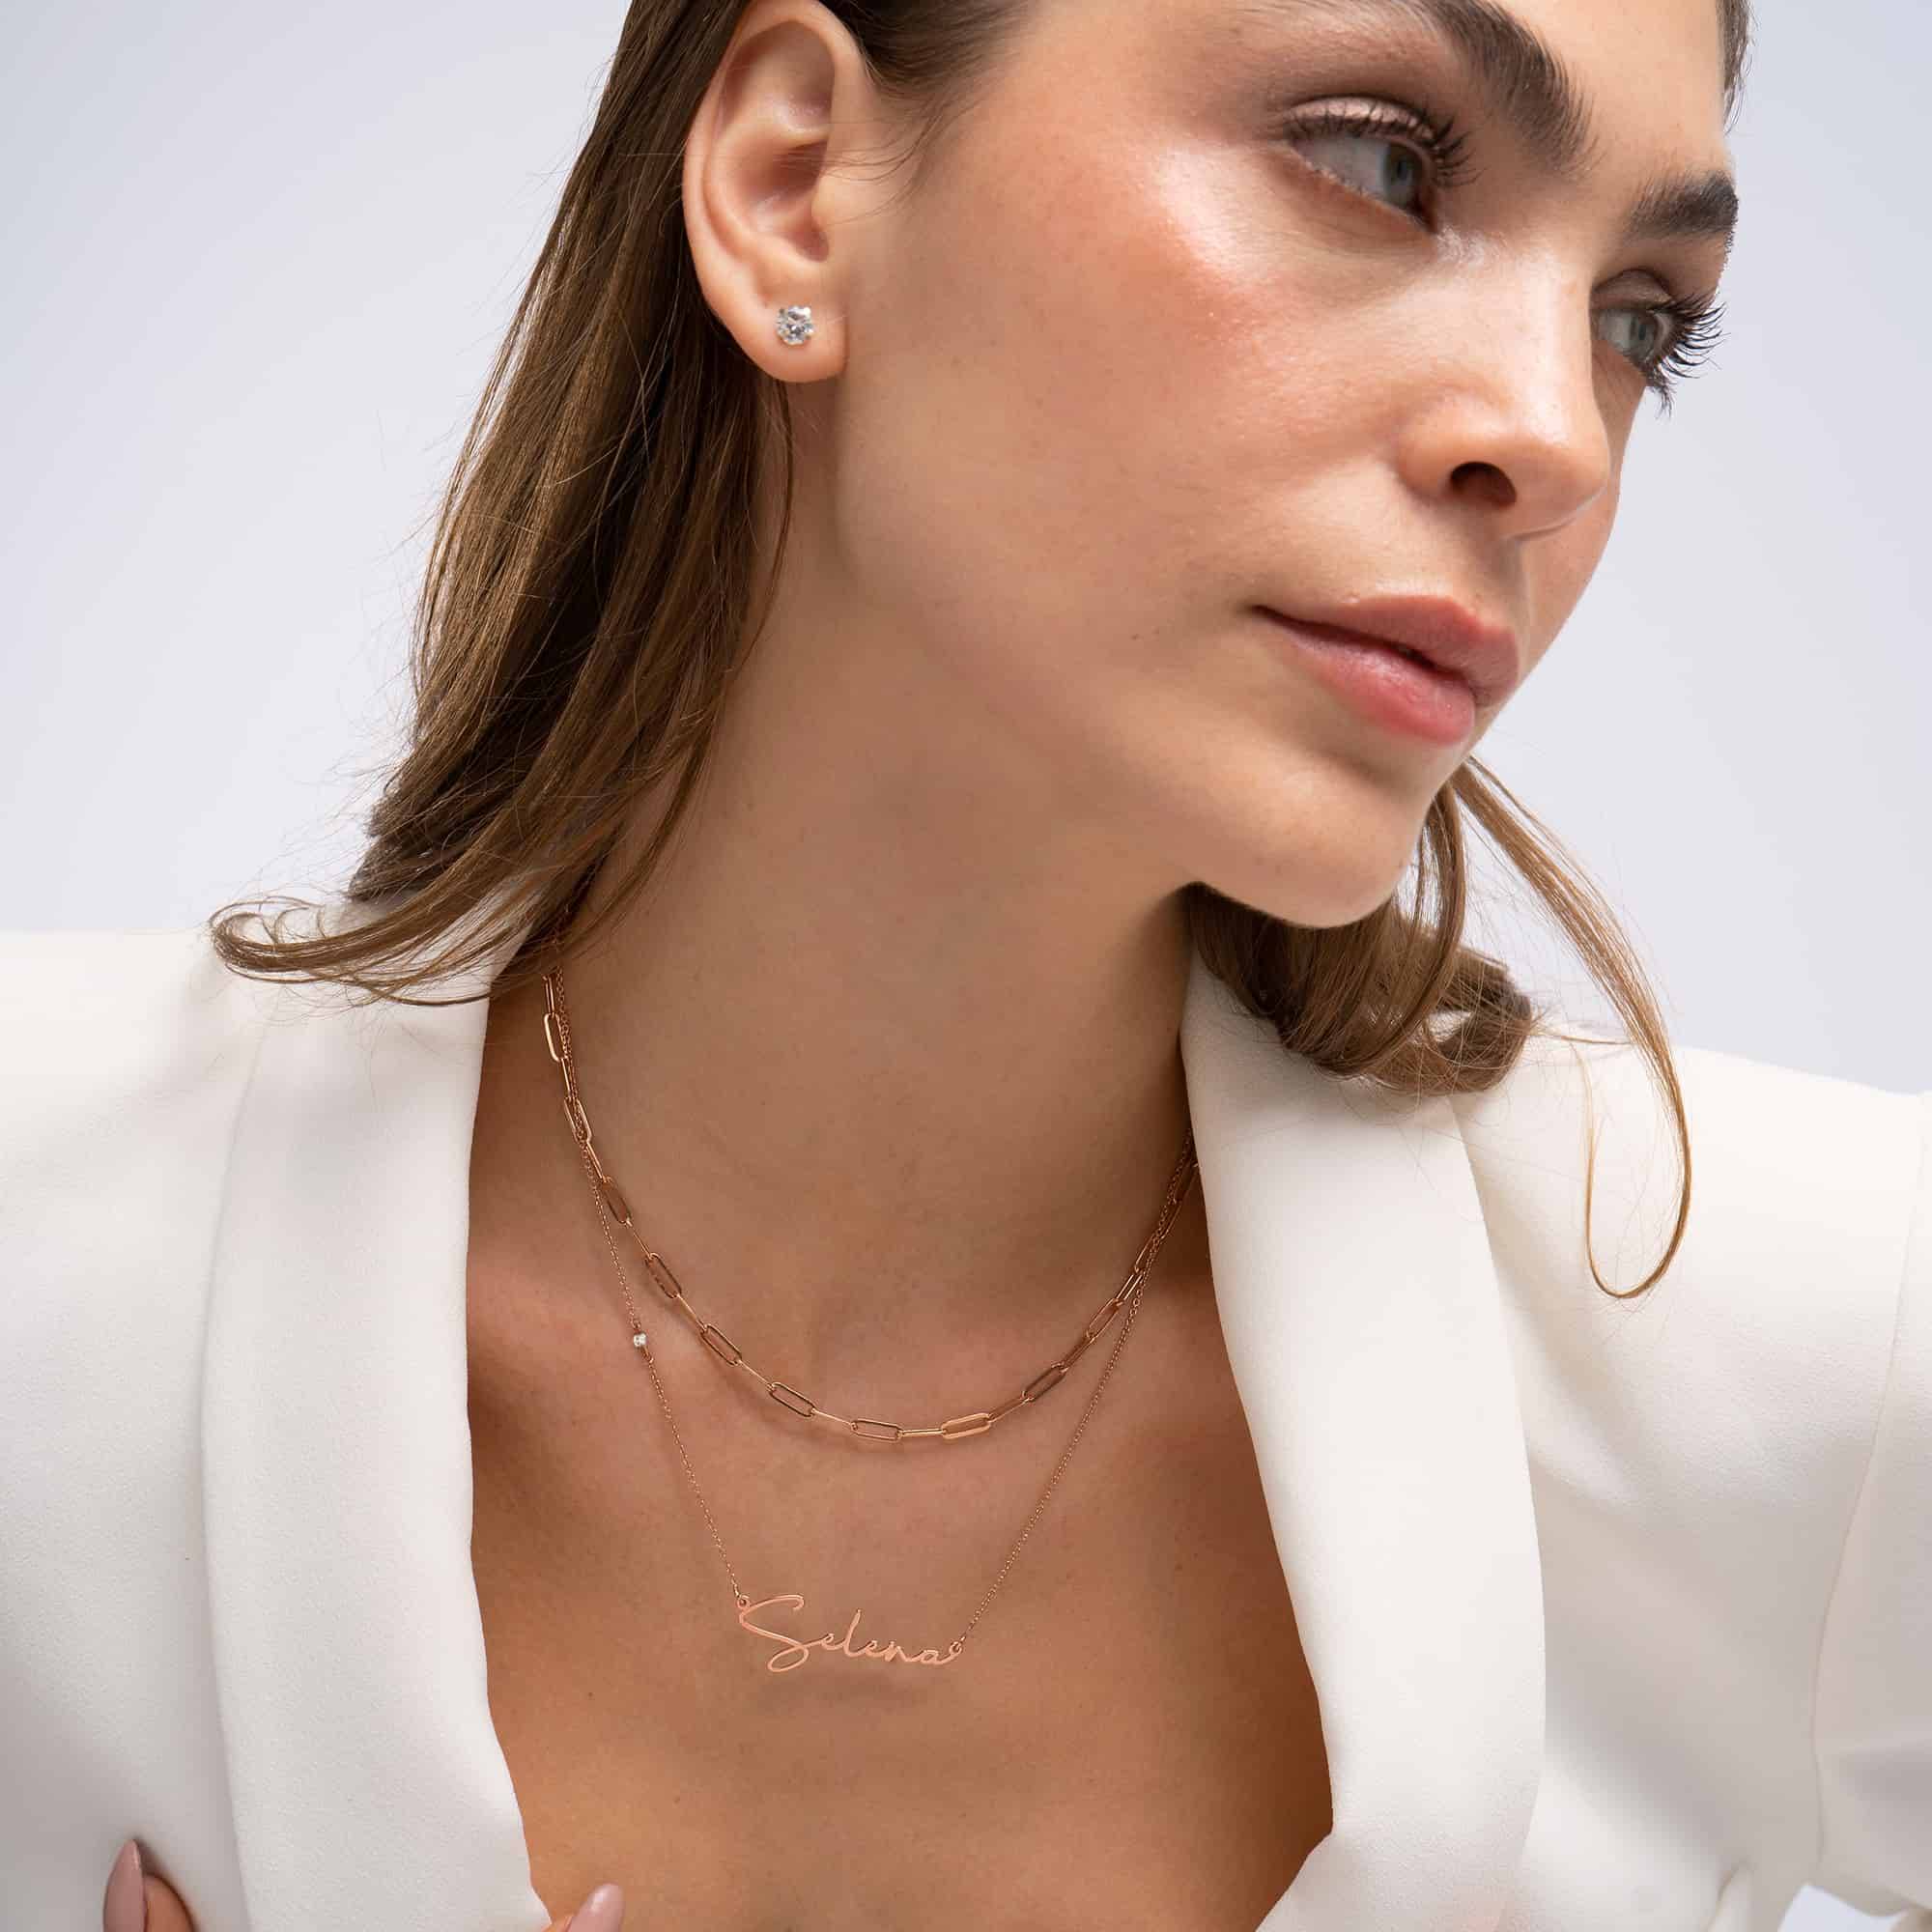 Paris Name Necklace with Diamonds - Rose Gold Vermeil-3 product photo